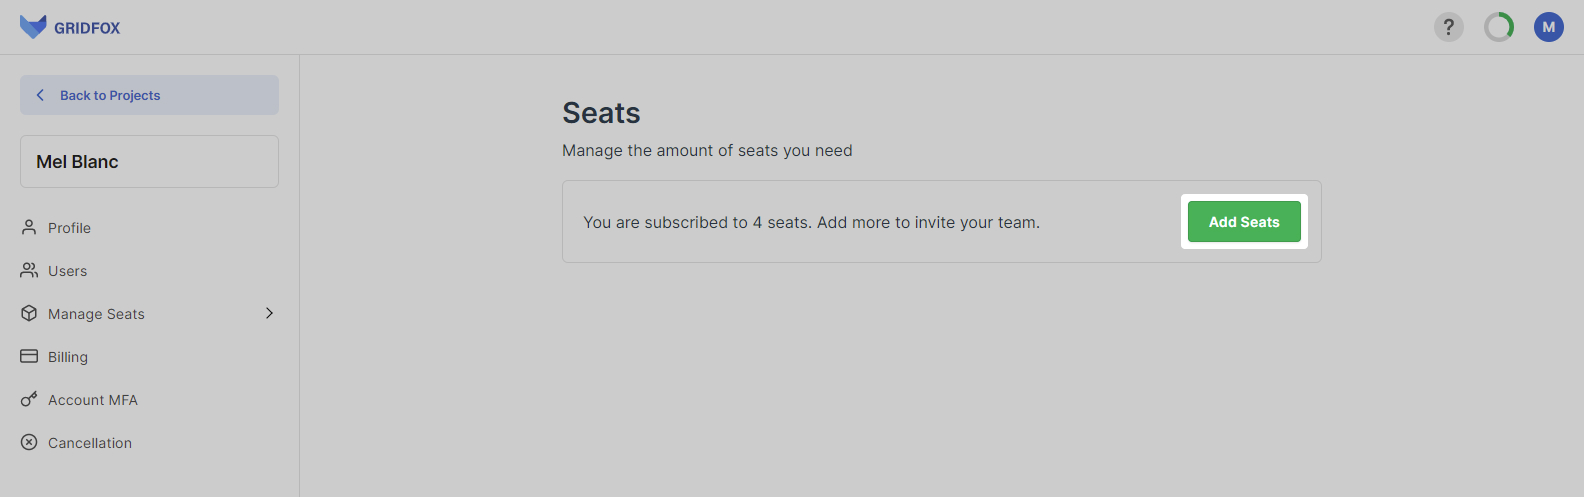 Upgrade Add Seats button